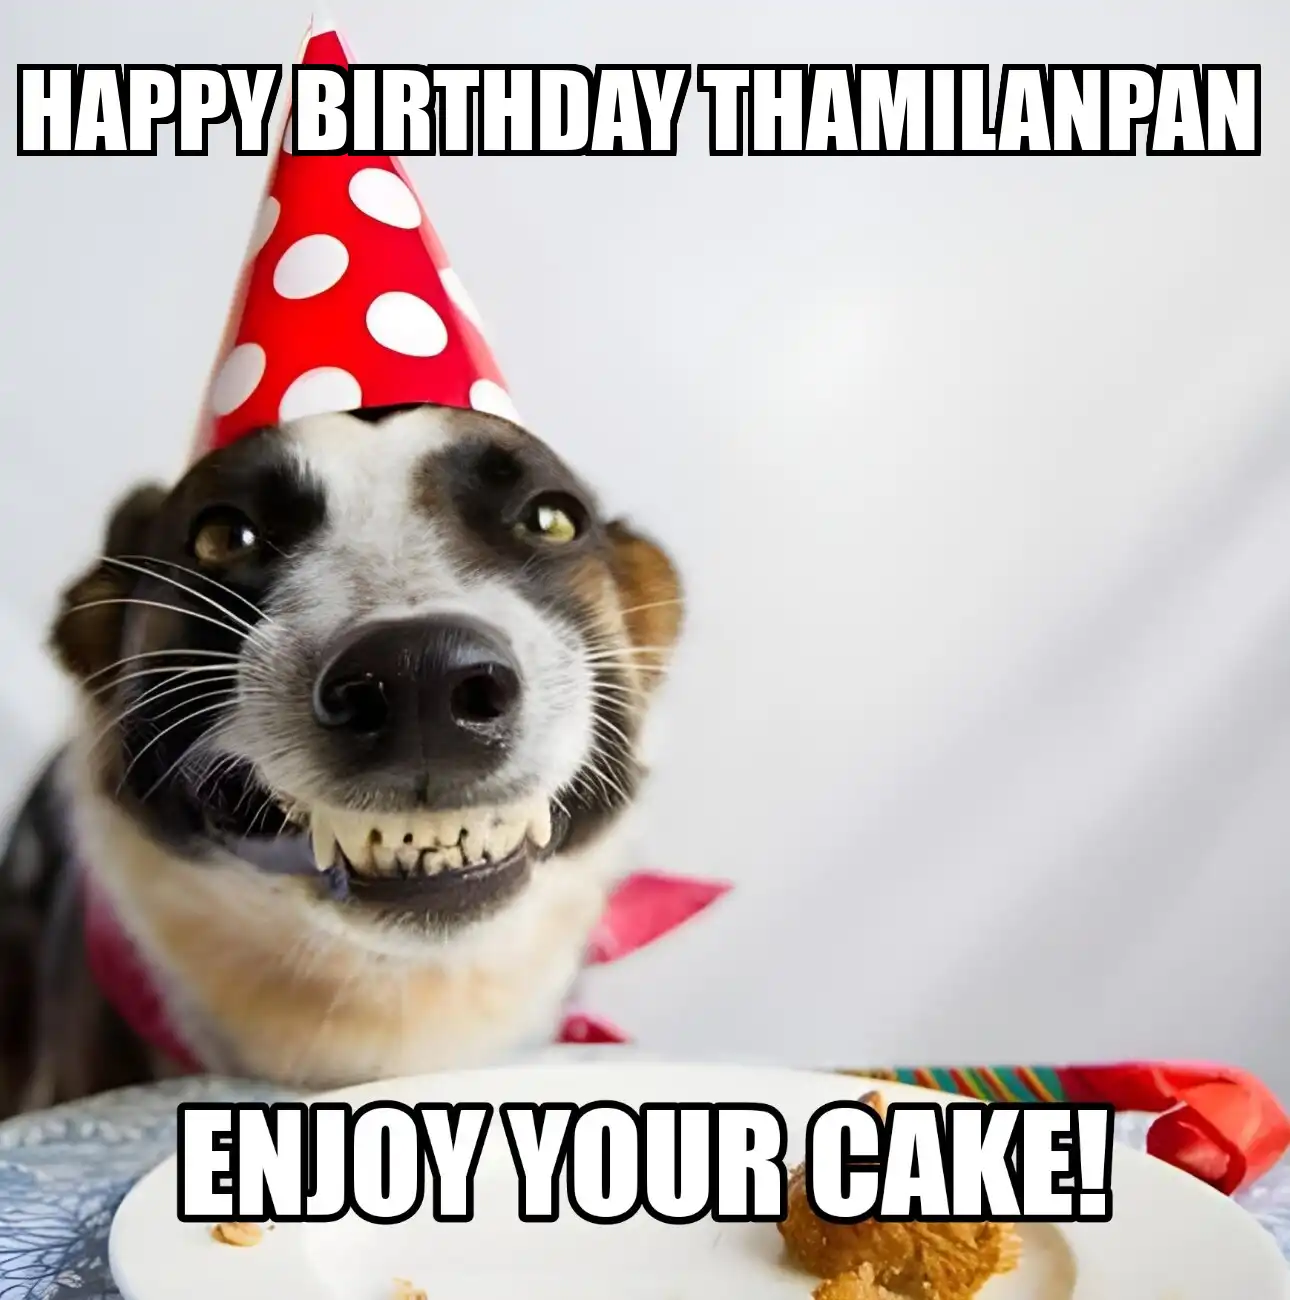 Happy Birthday Thamilanpan Enjoy Your Cake Dog Meme